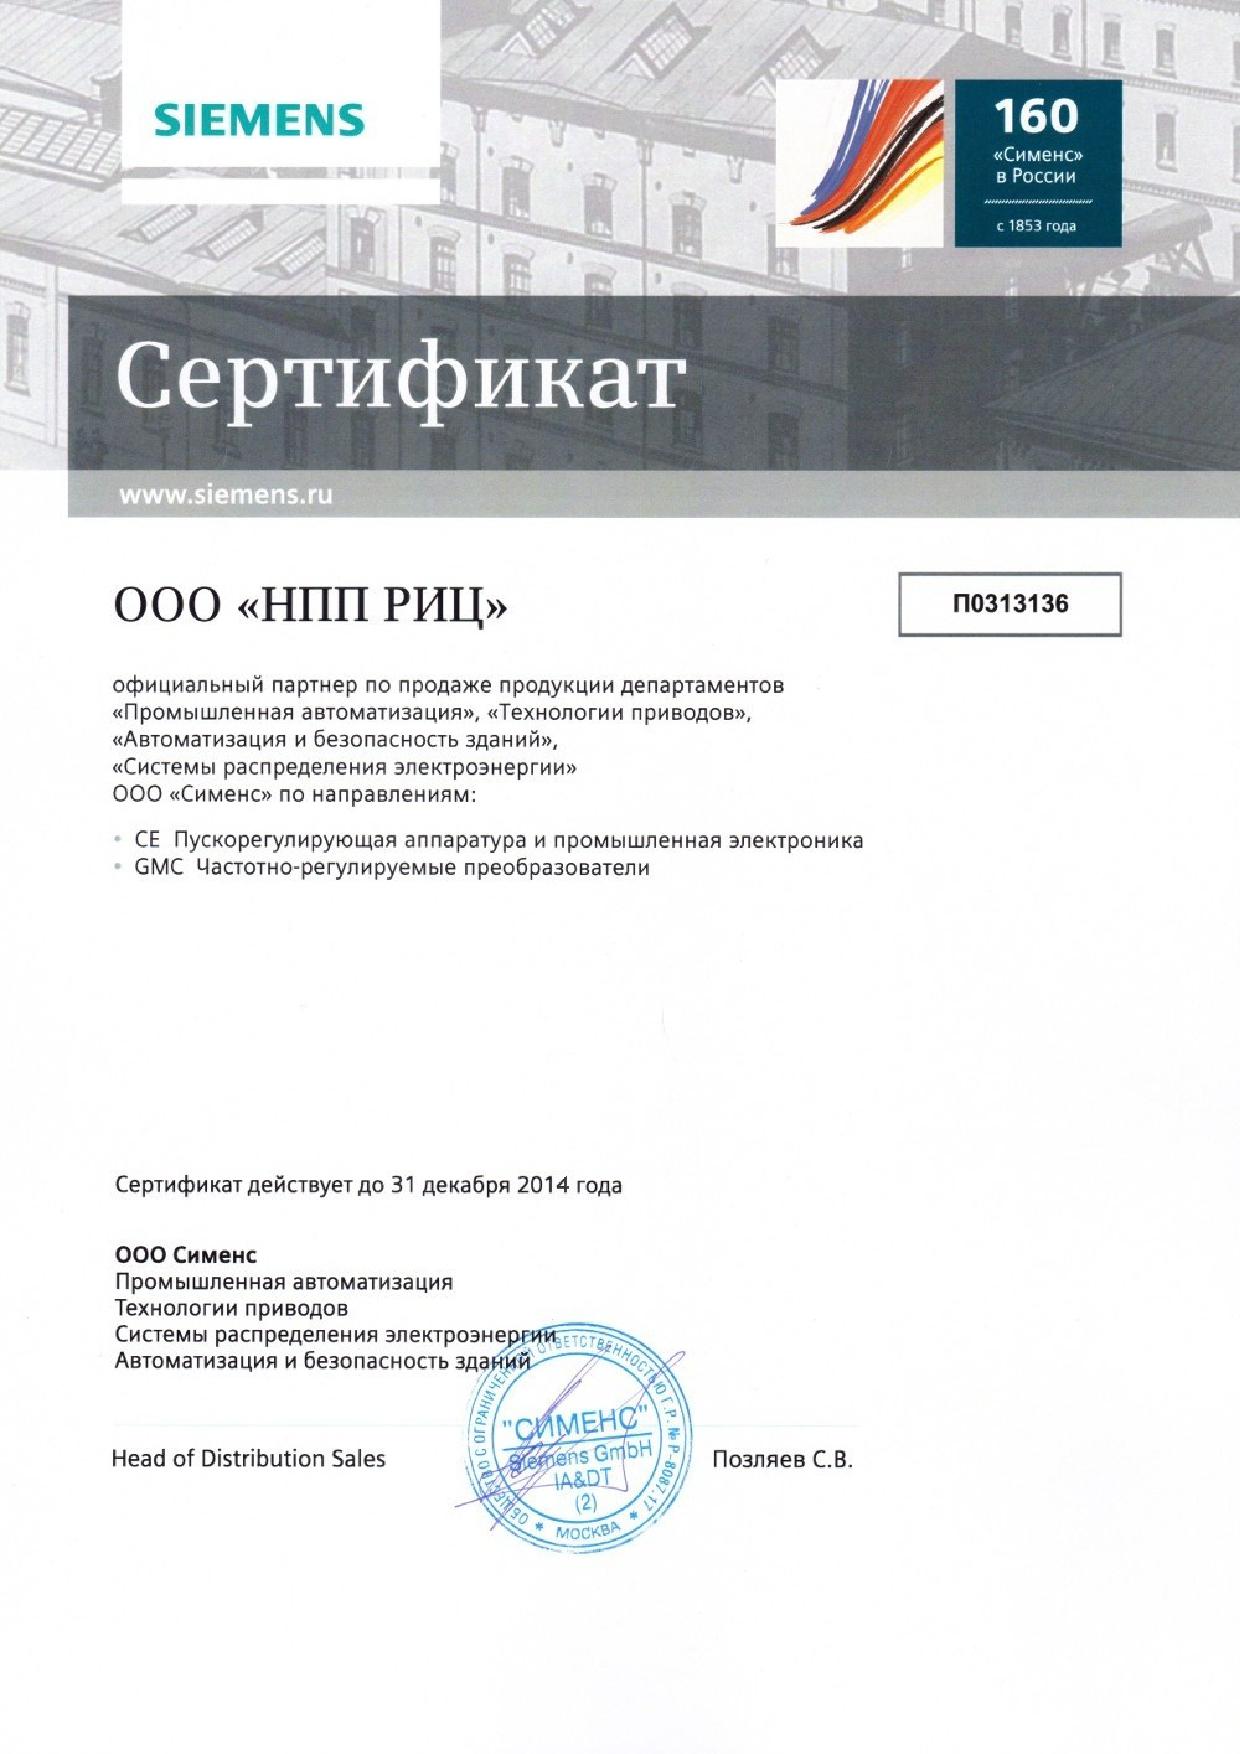 2014-01-09-2014-12-31-certificate-SIEMENS